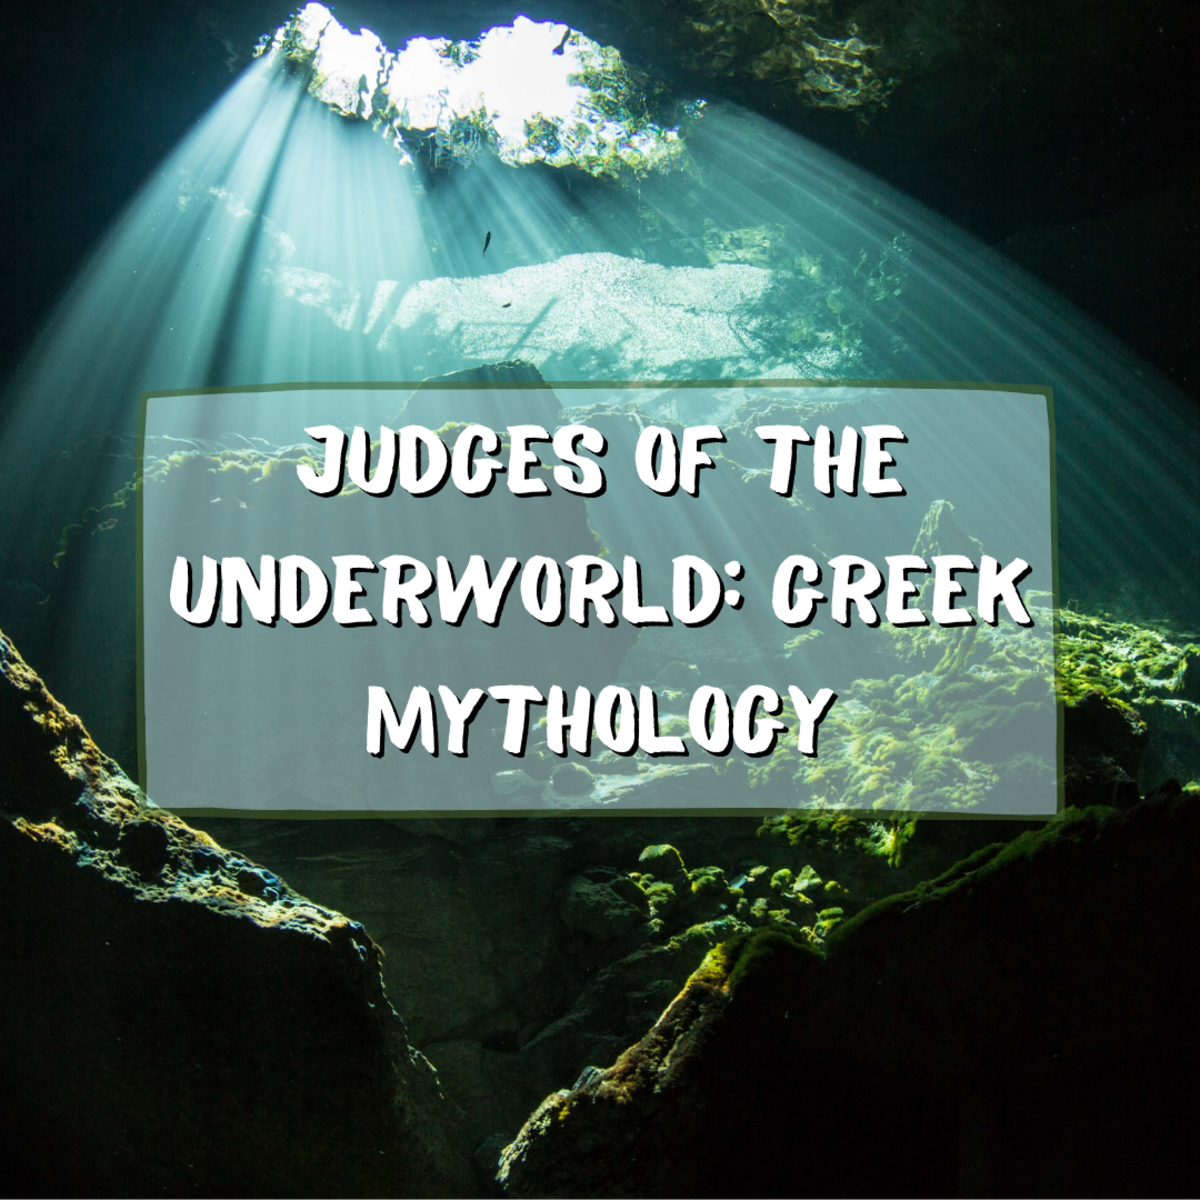 The Judges of the Underworld in Greek Mythology